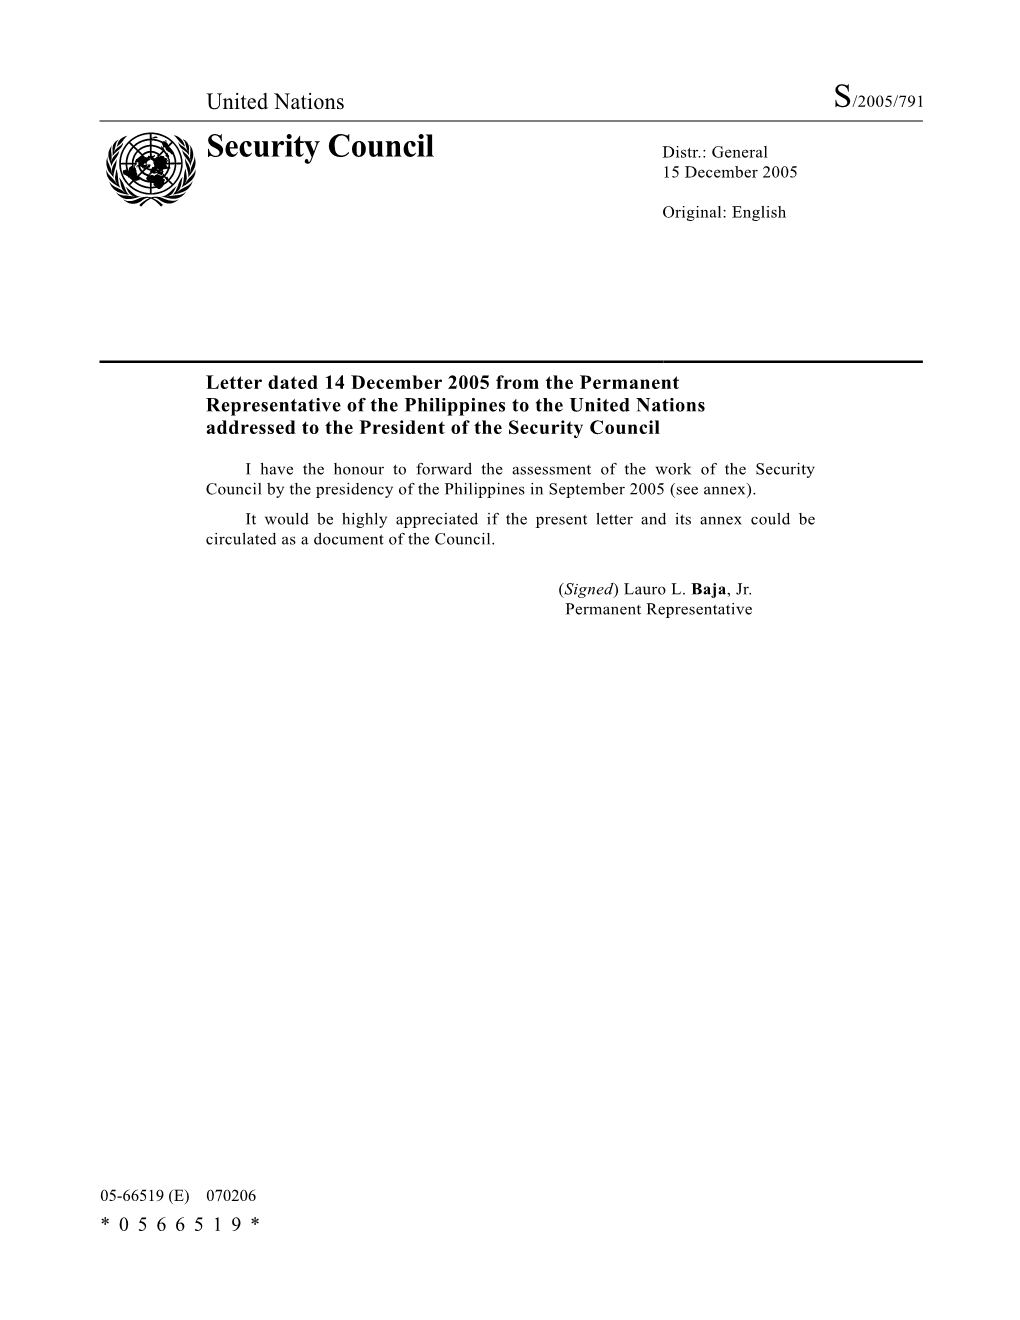 Security Council Distr.: General 15 December 2005